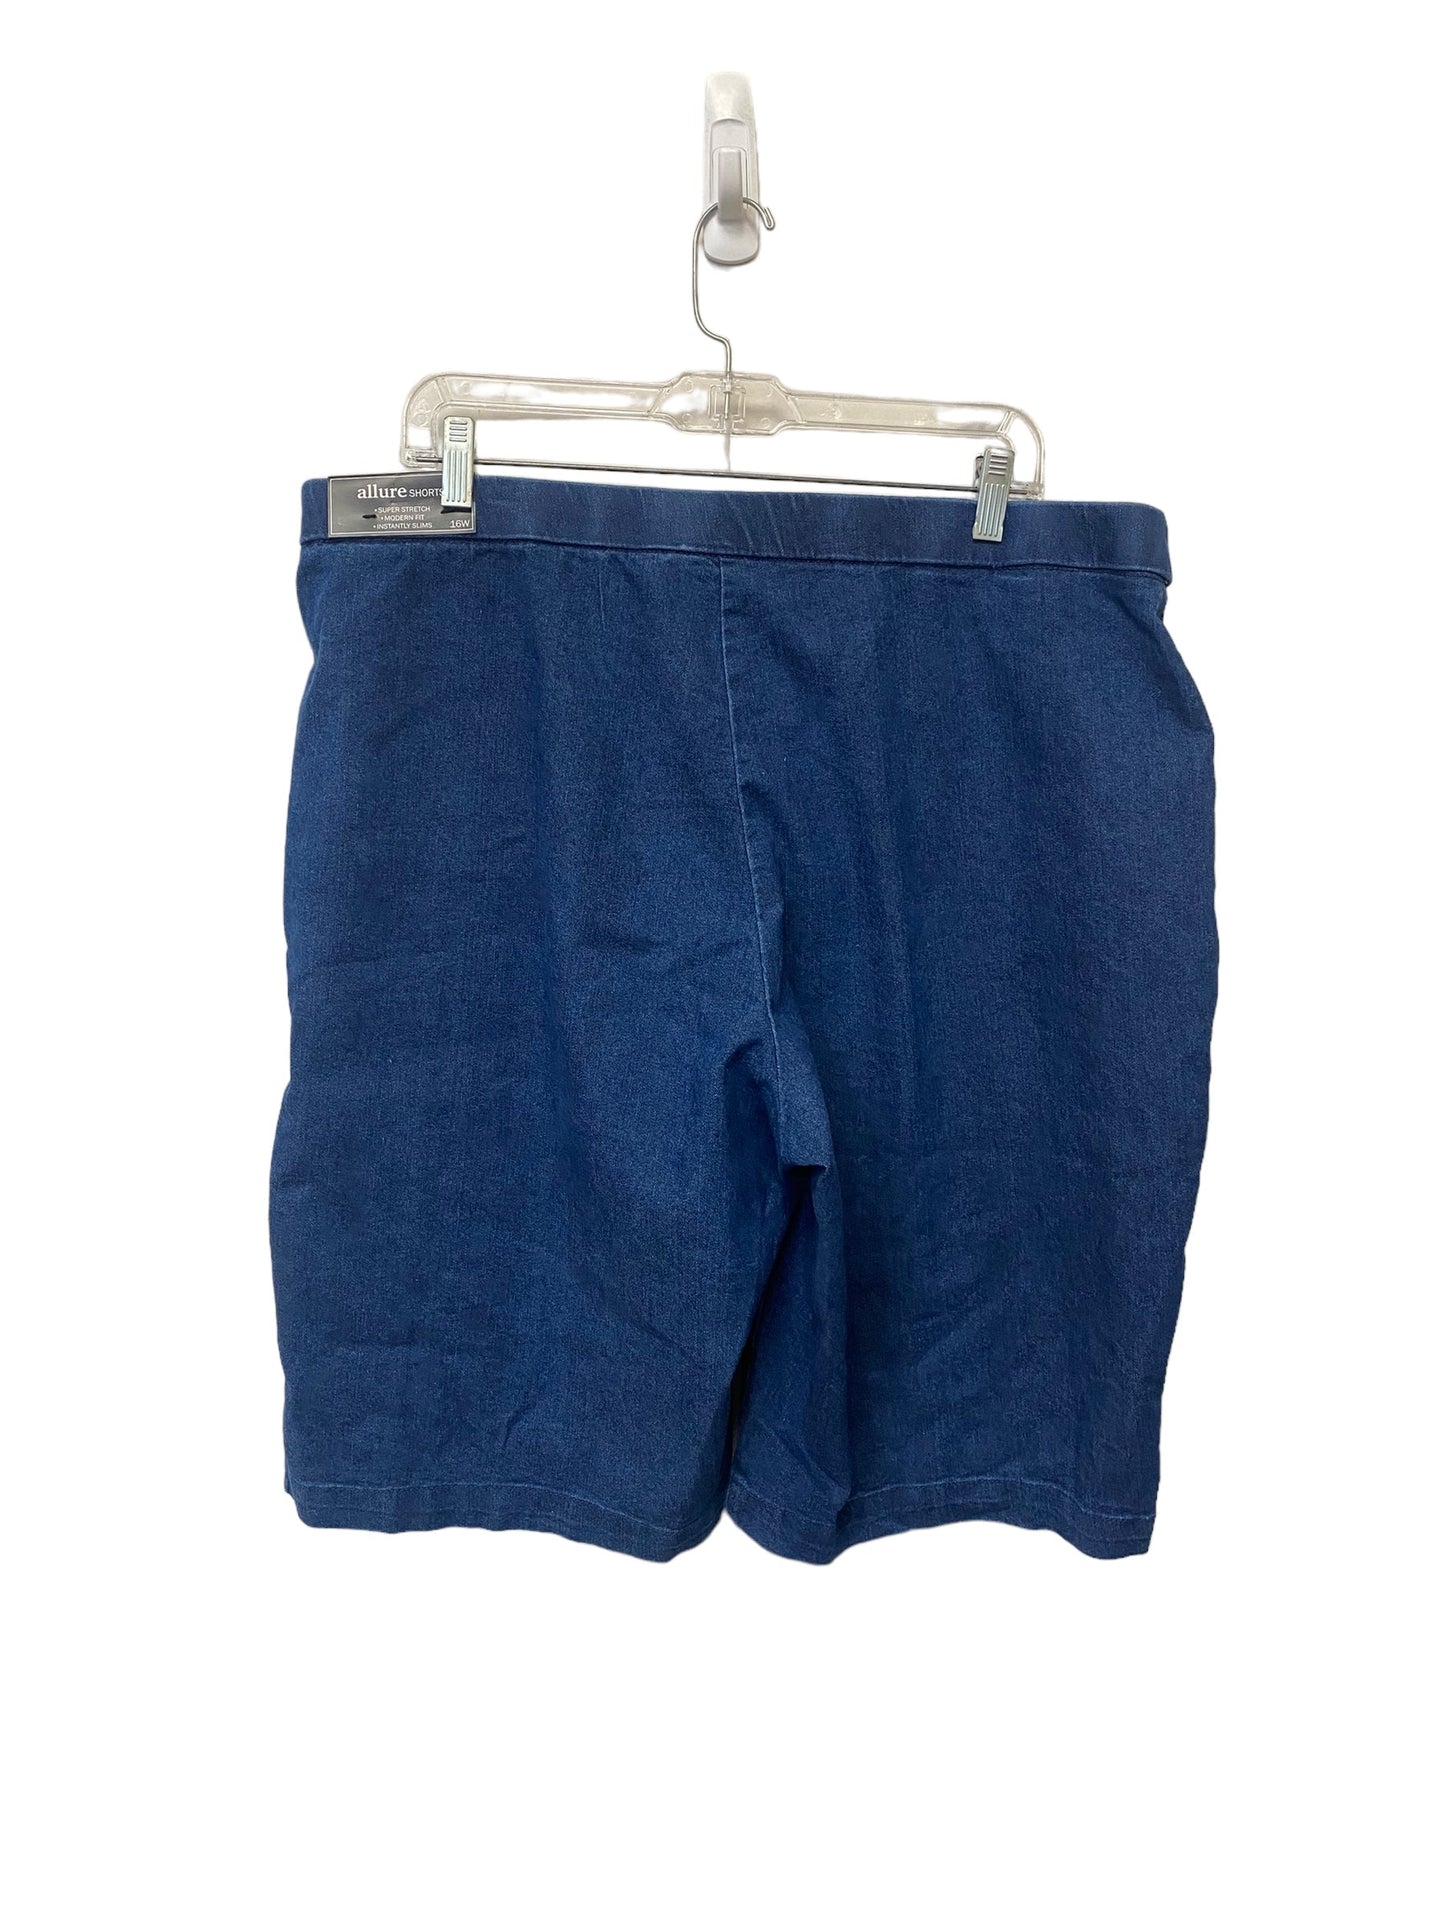 Blue Denim Shorts Alfred Dunner, Size 16